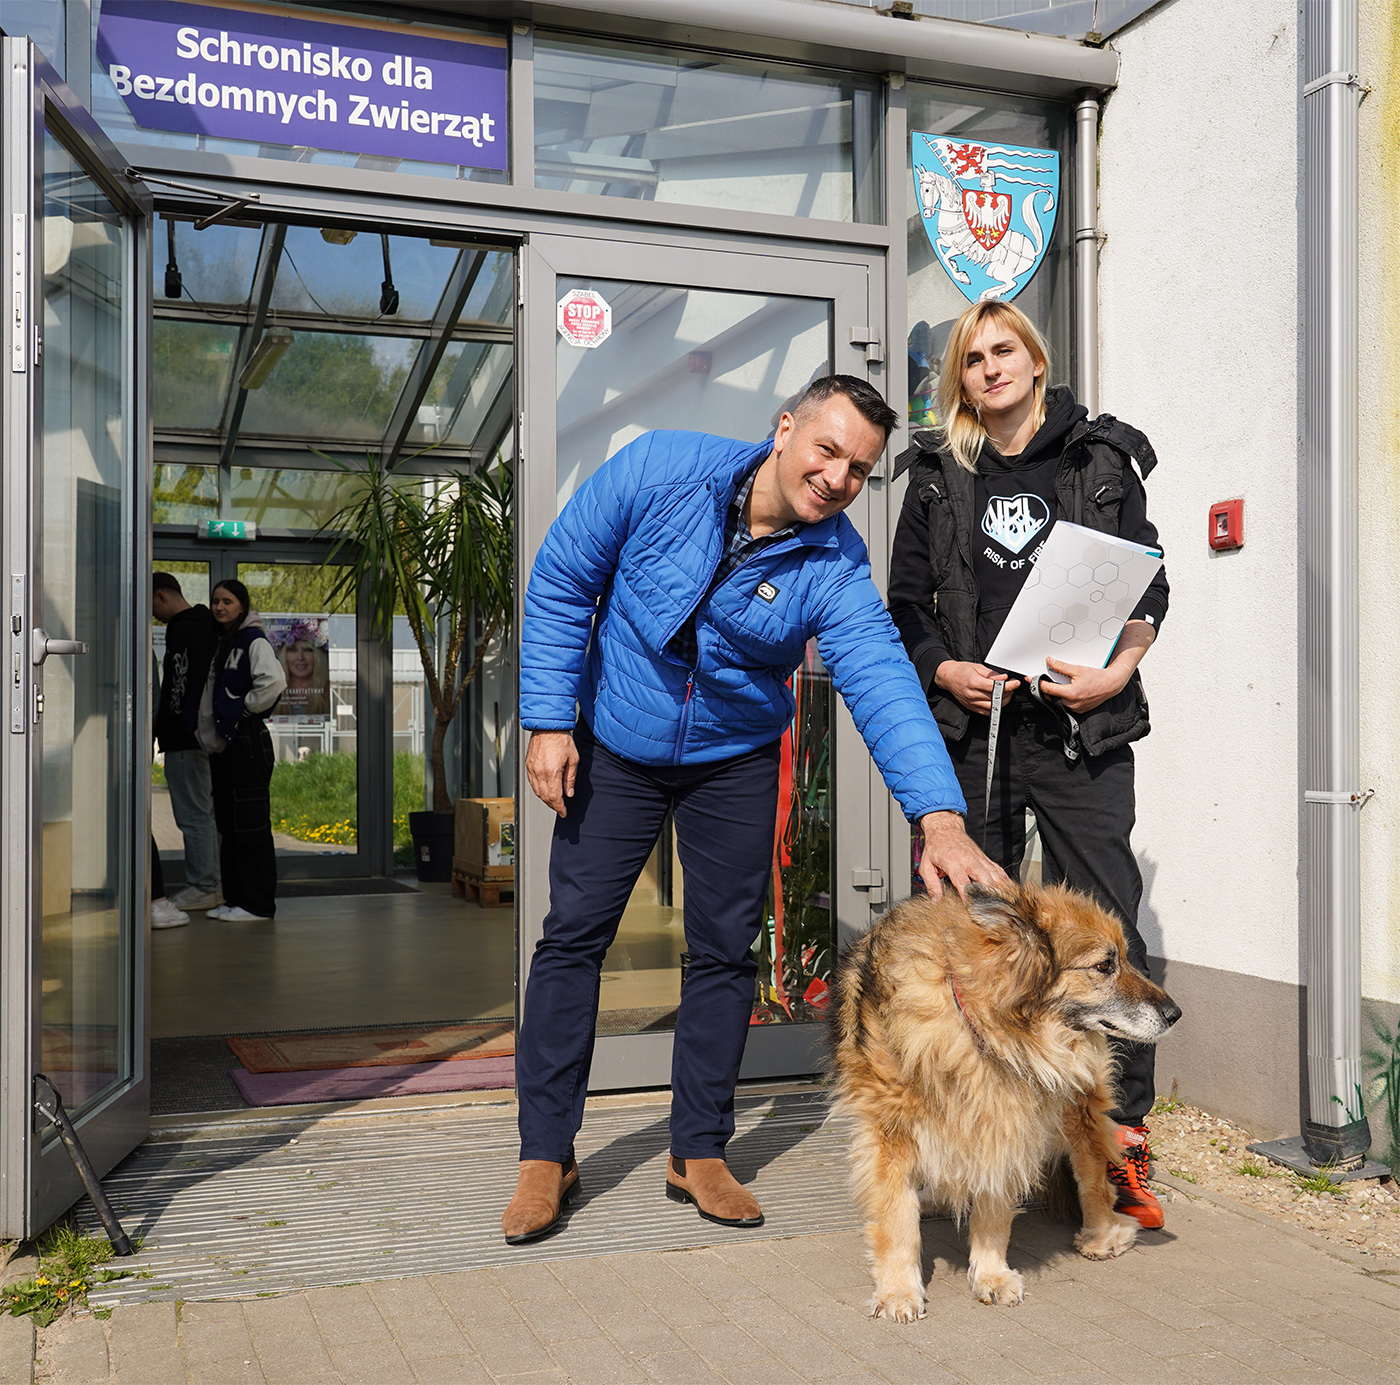 Support for ‘Leśny Zakątek’ animal shelter in Koszalin